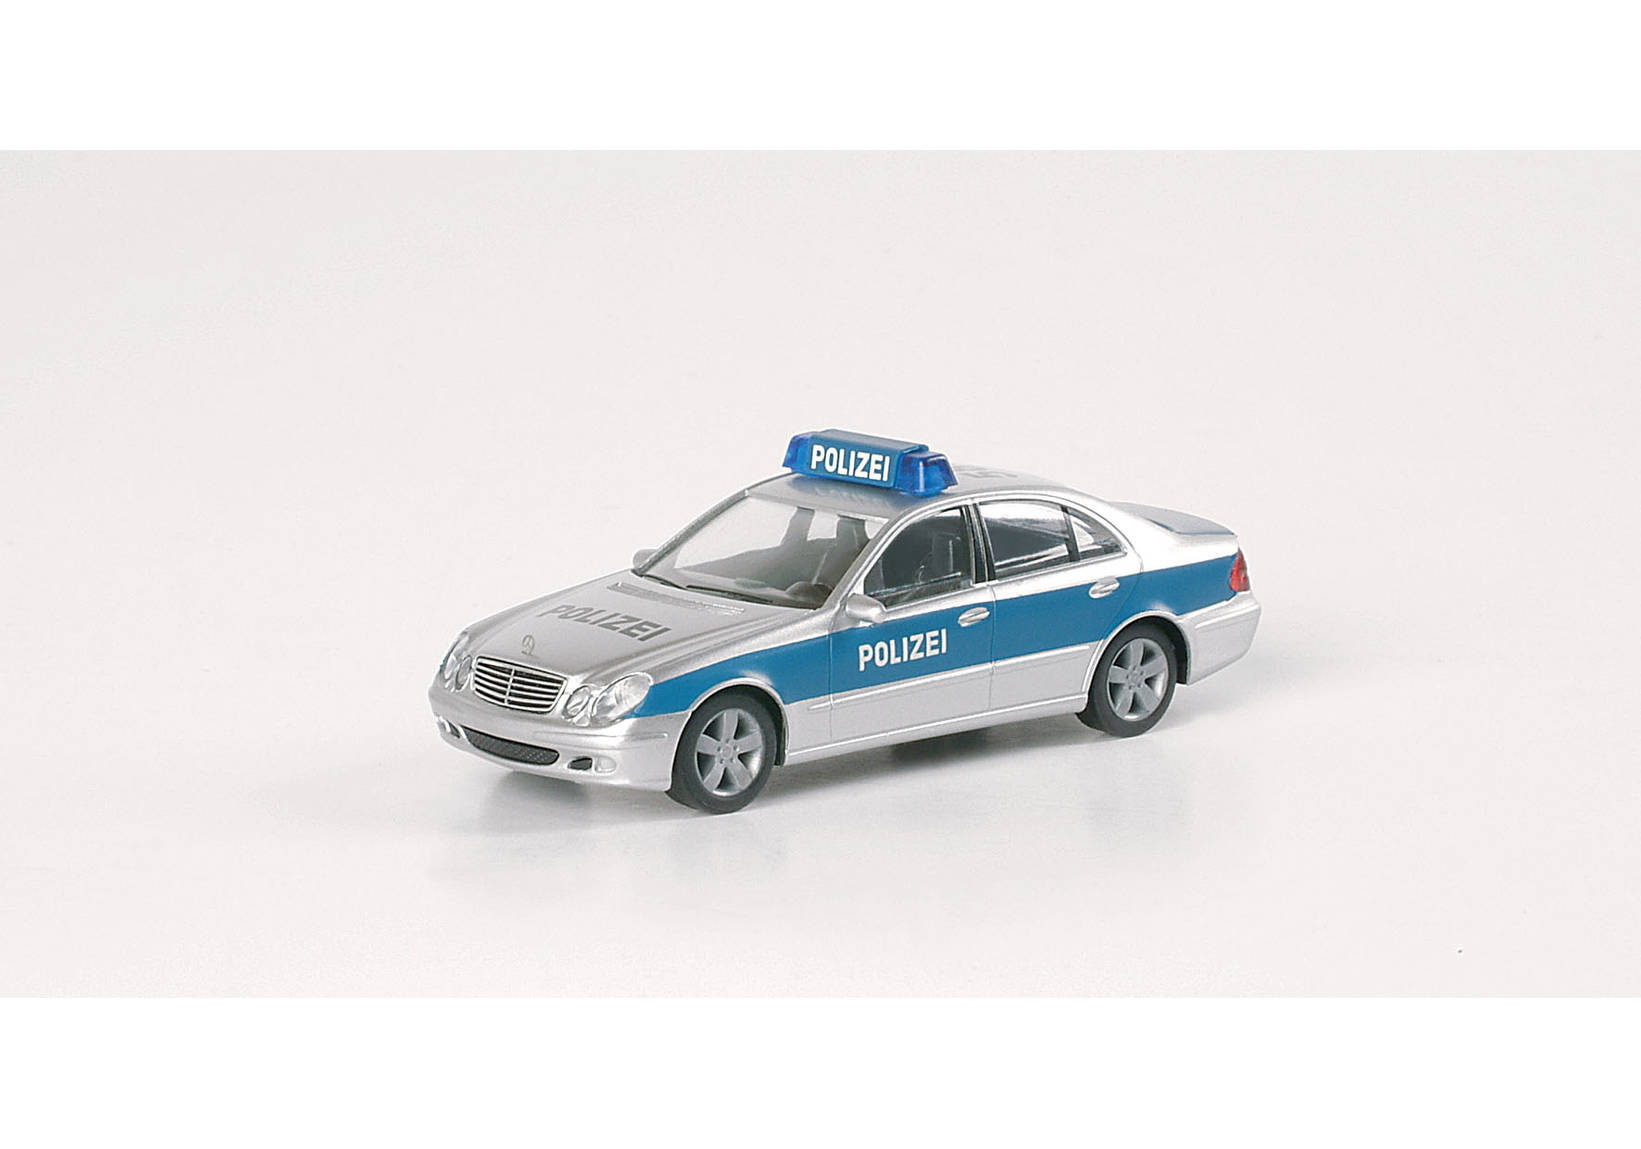 Mercedes-Benz E Class "Police Hamburg"